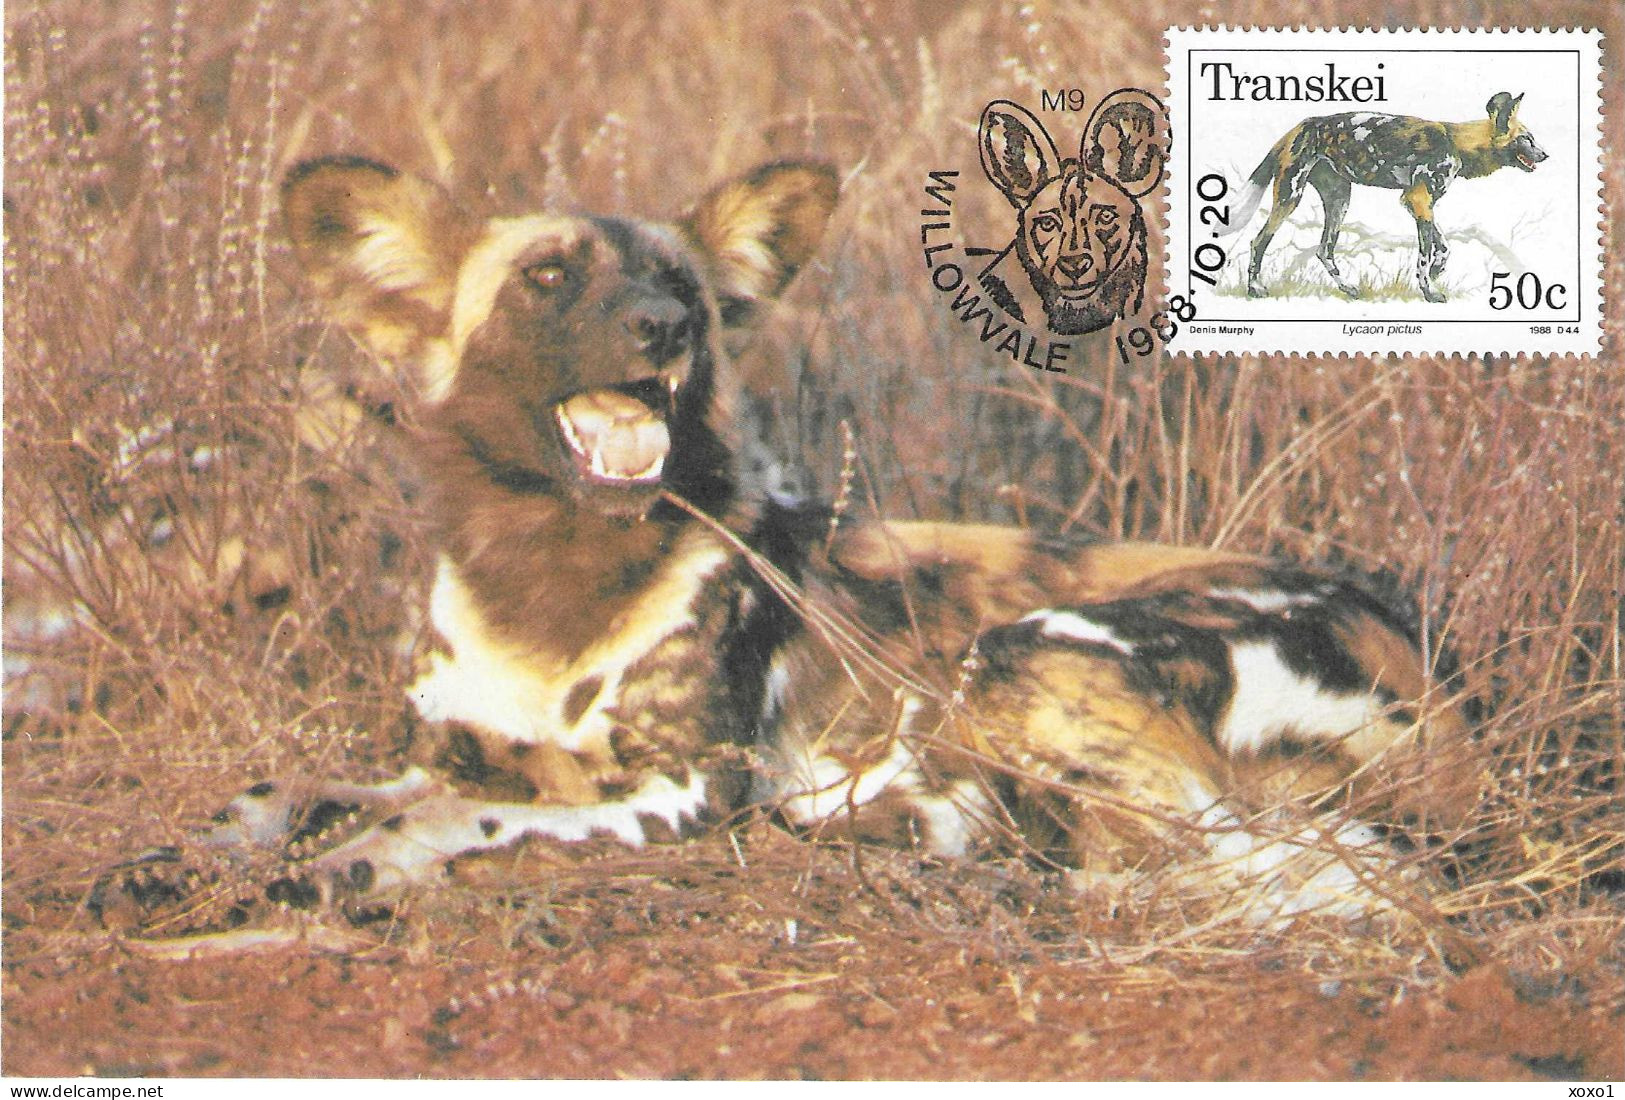 Transkei South Africa 1988 MiNr. 229  Animals  African Wild Dog (Lycaon Pictus) MC 1.80 € - Perros